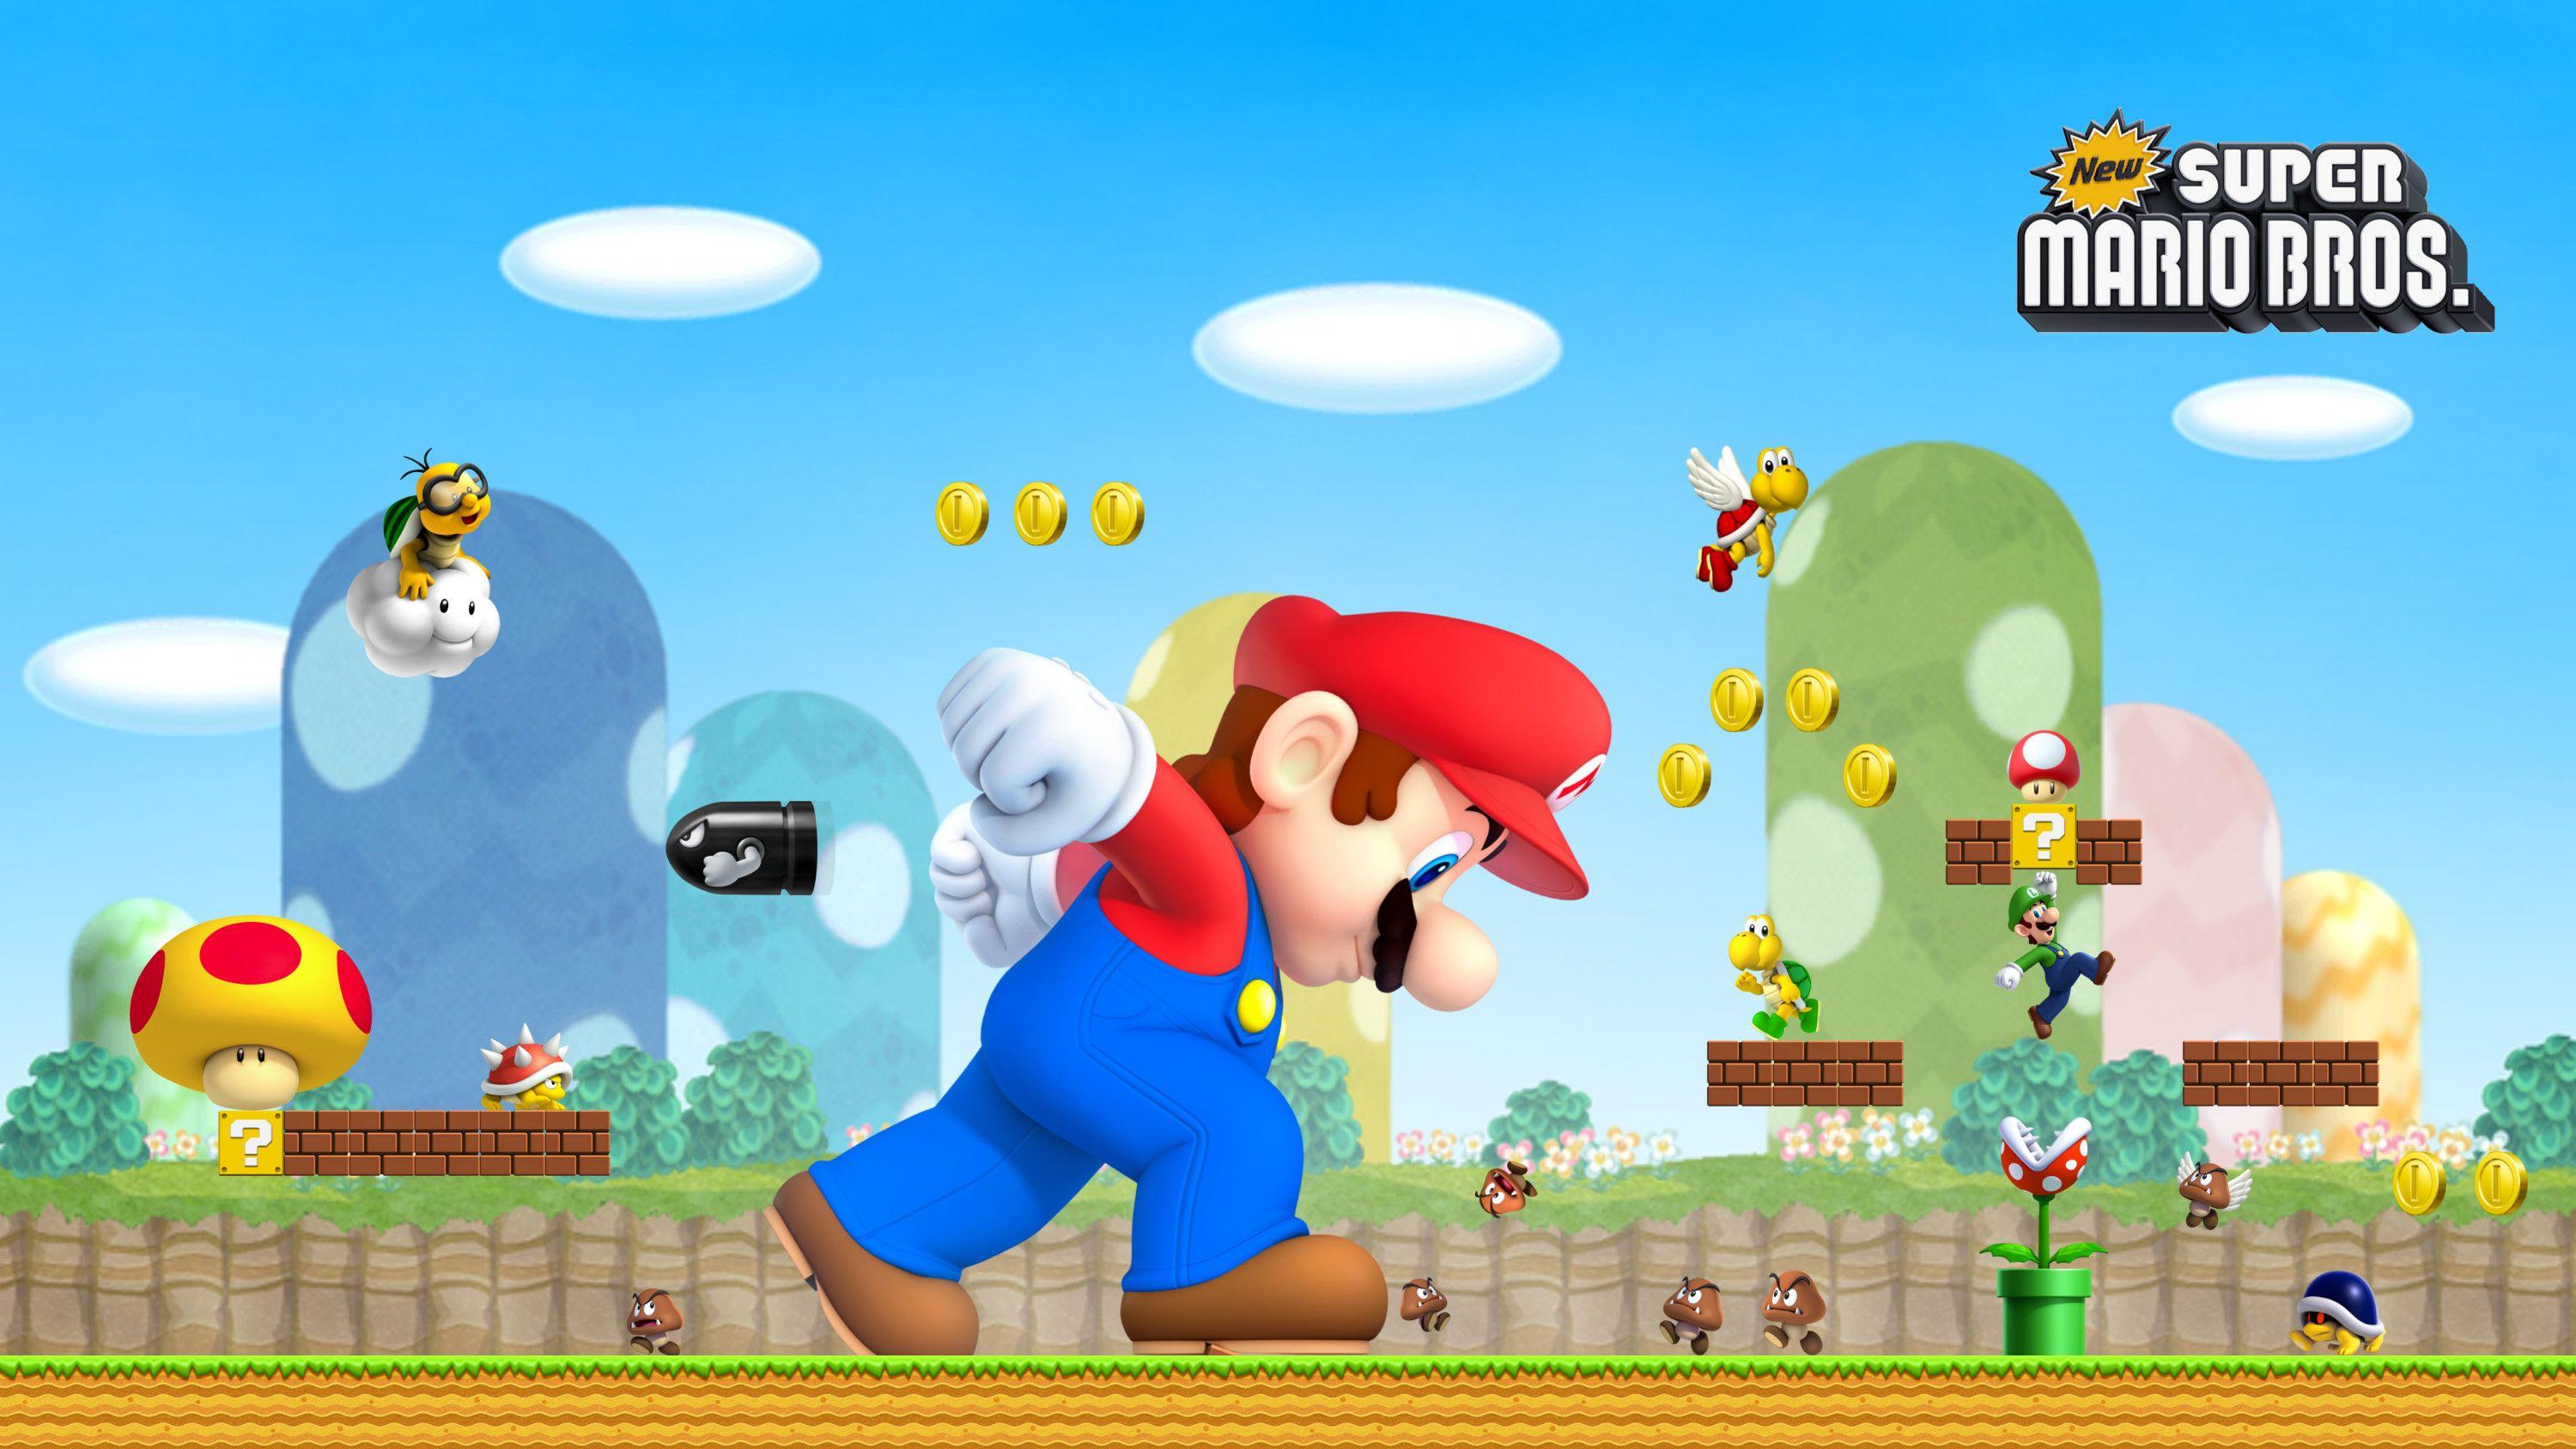 Super Mario Bros.
Wallpapers - Wallpaper Cave